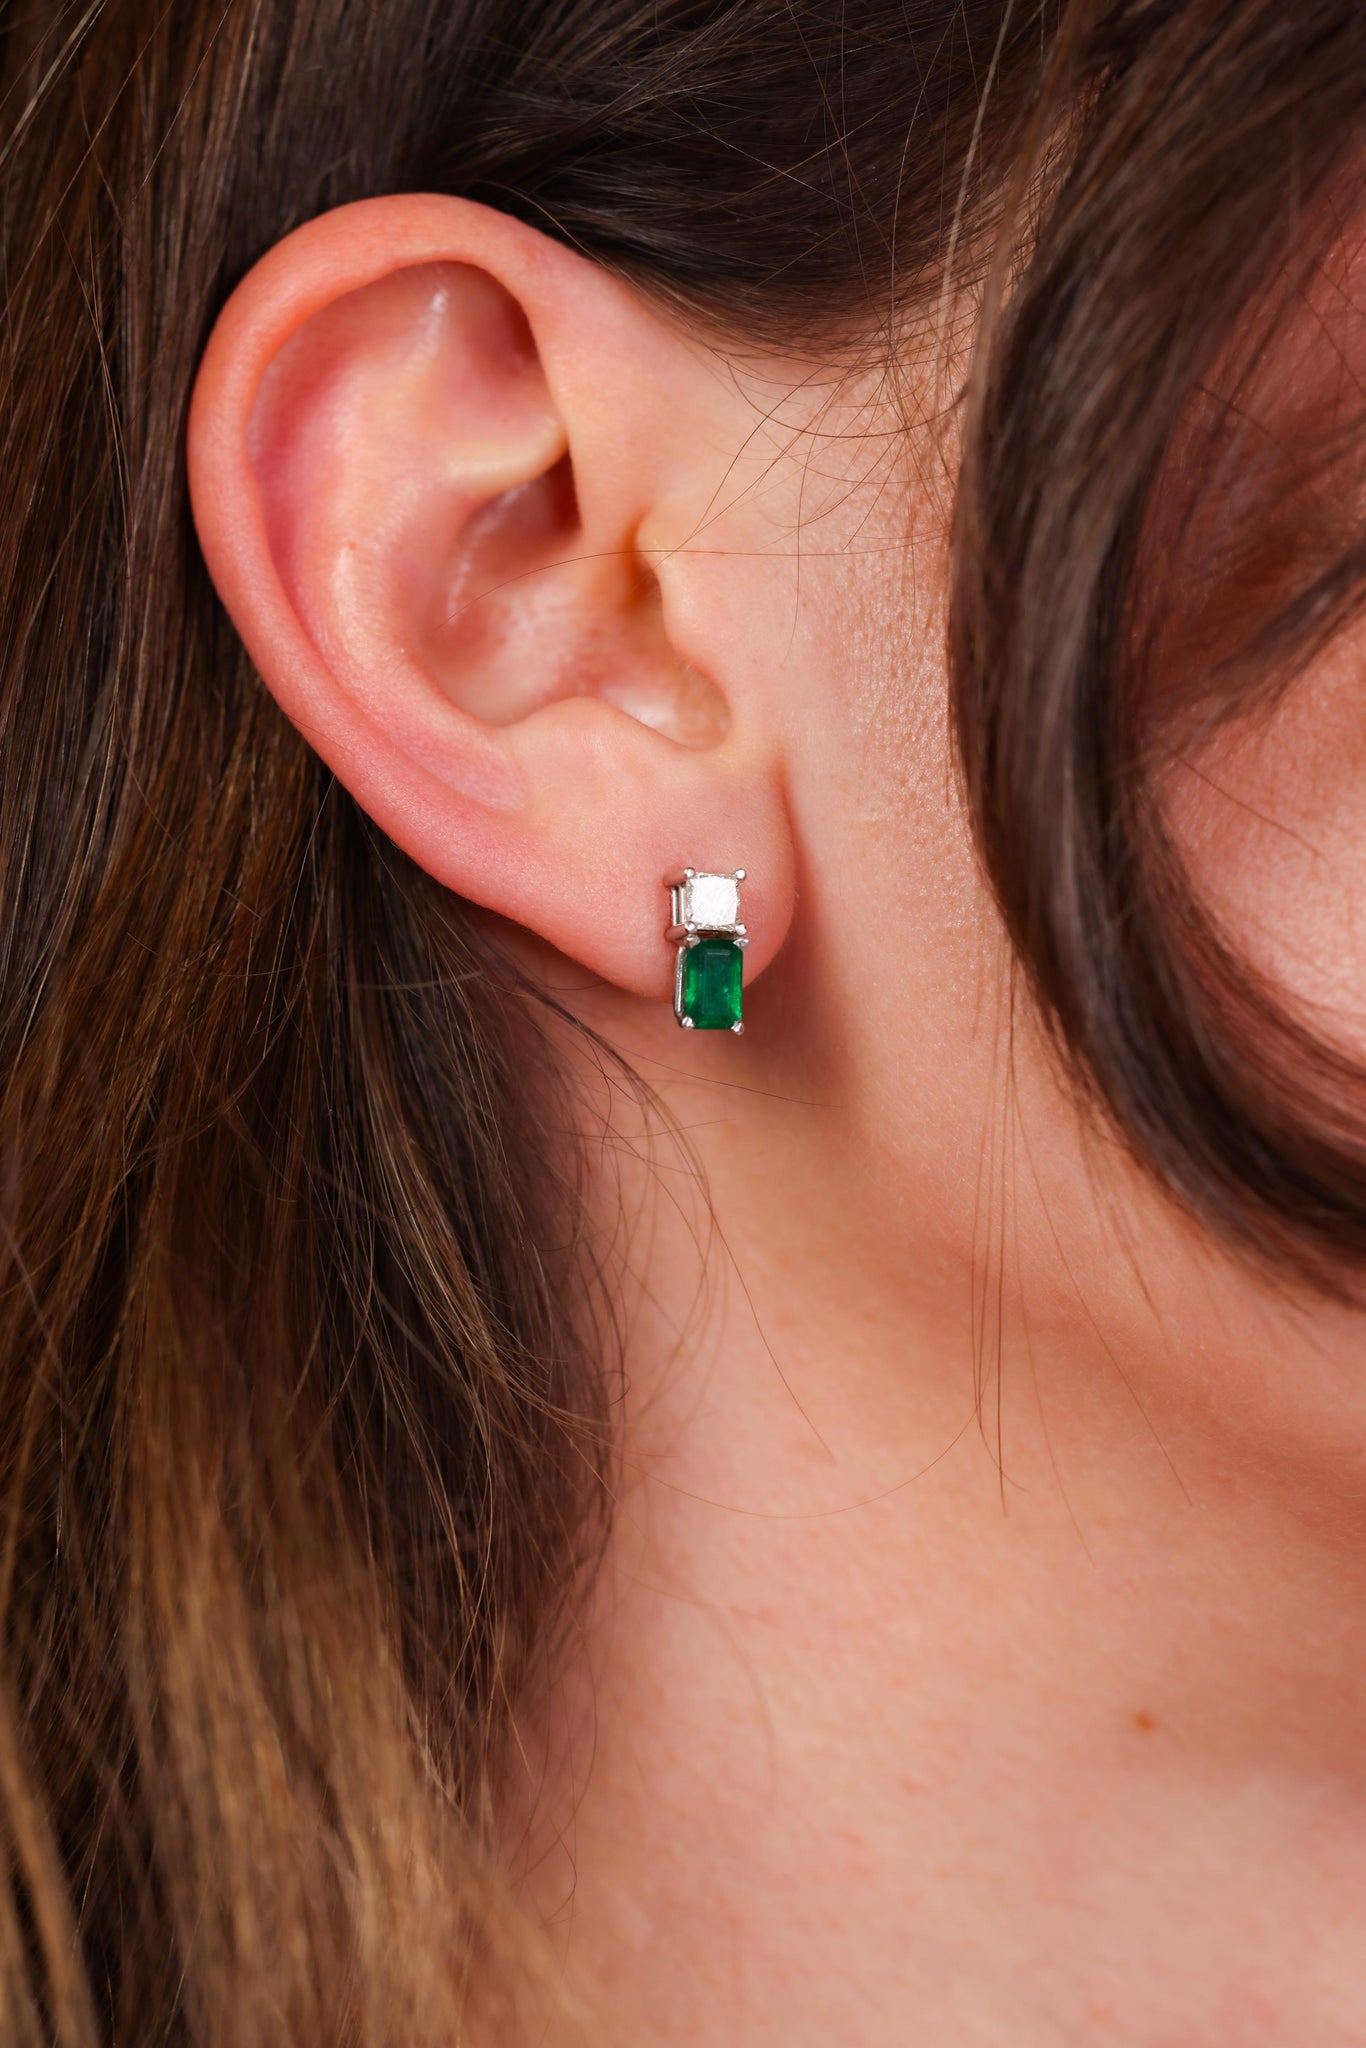 Emerald Diamond White Gold Earrings  Jack Weir & Sons   